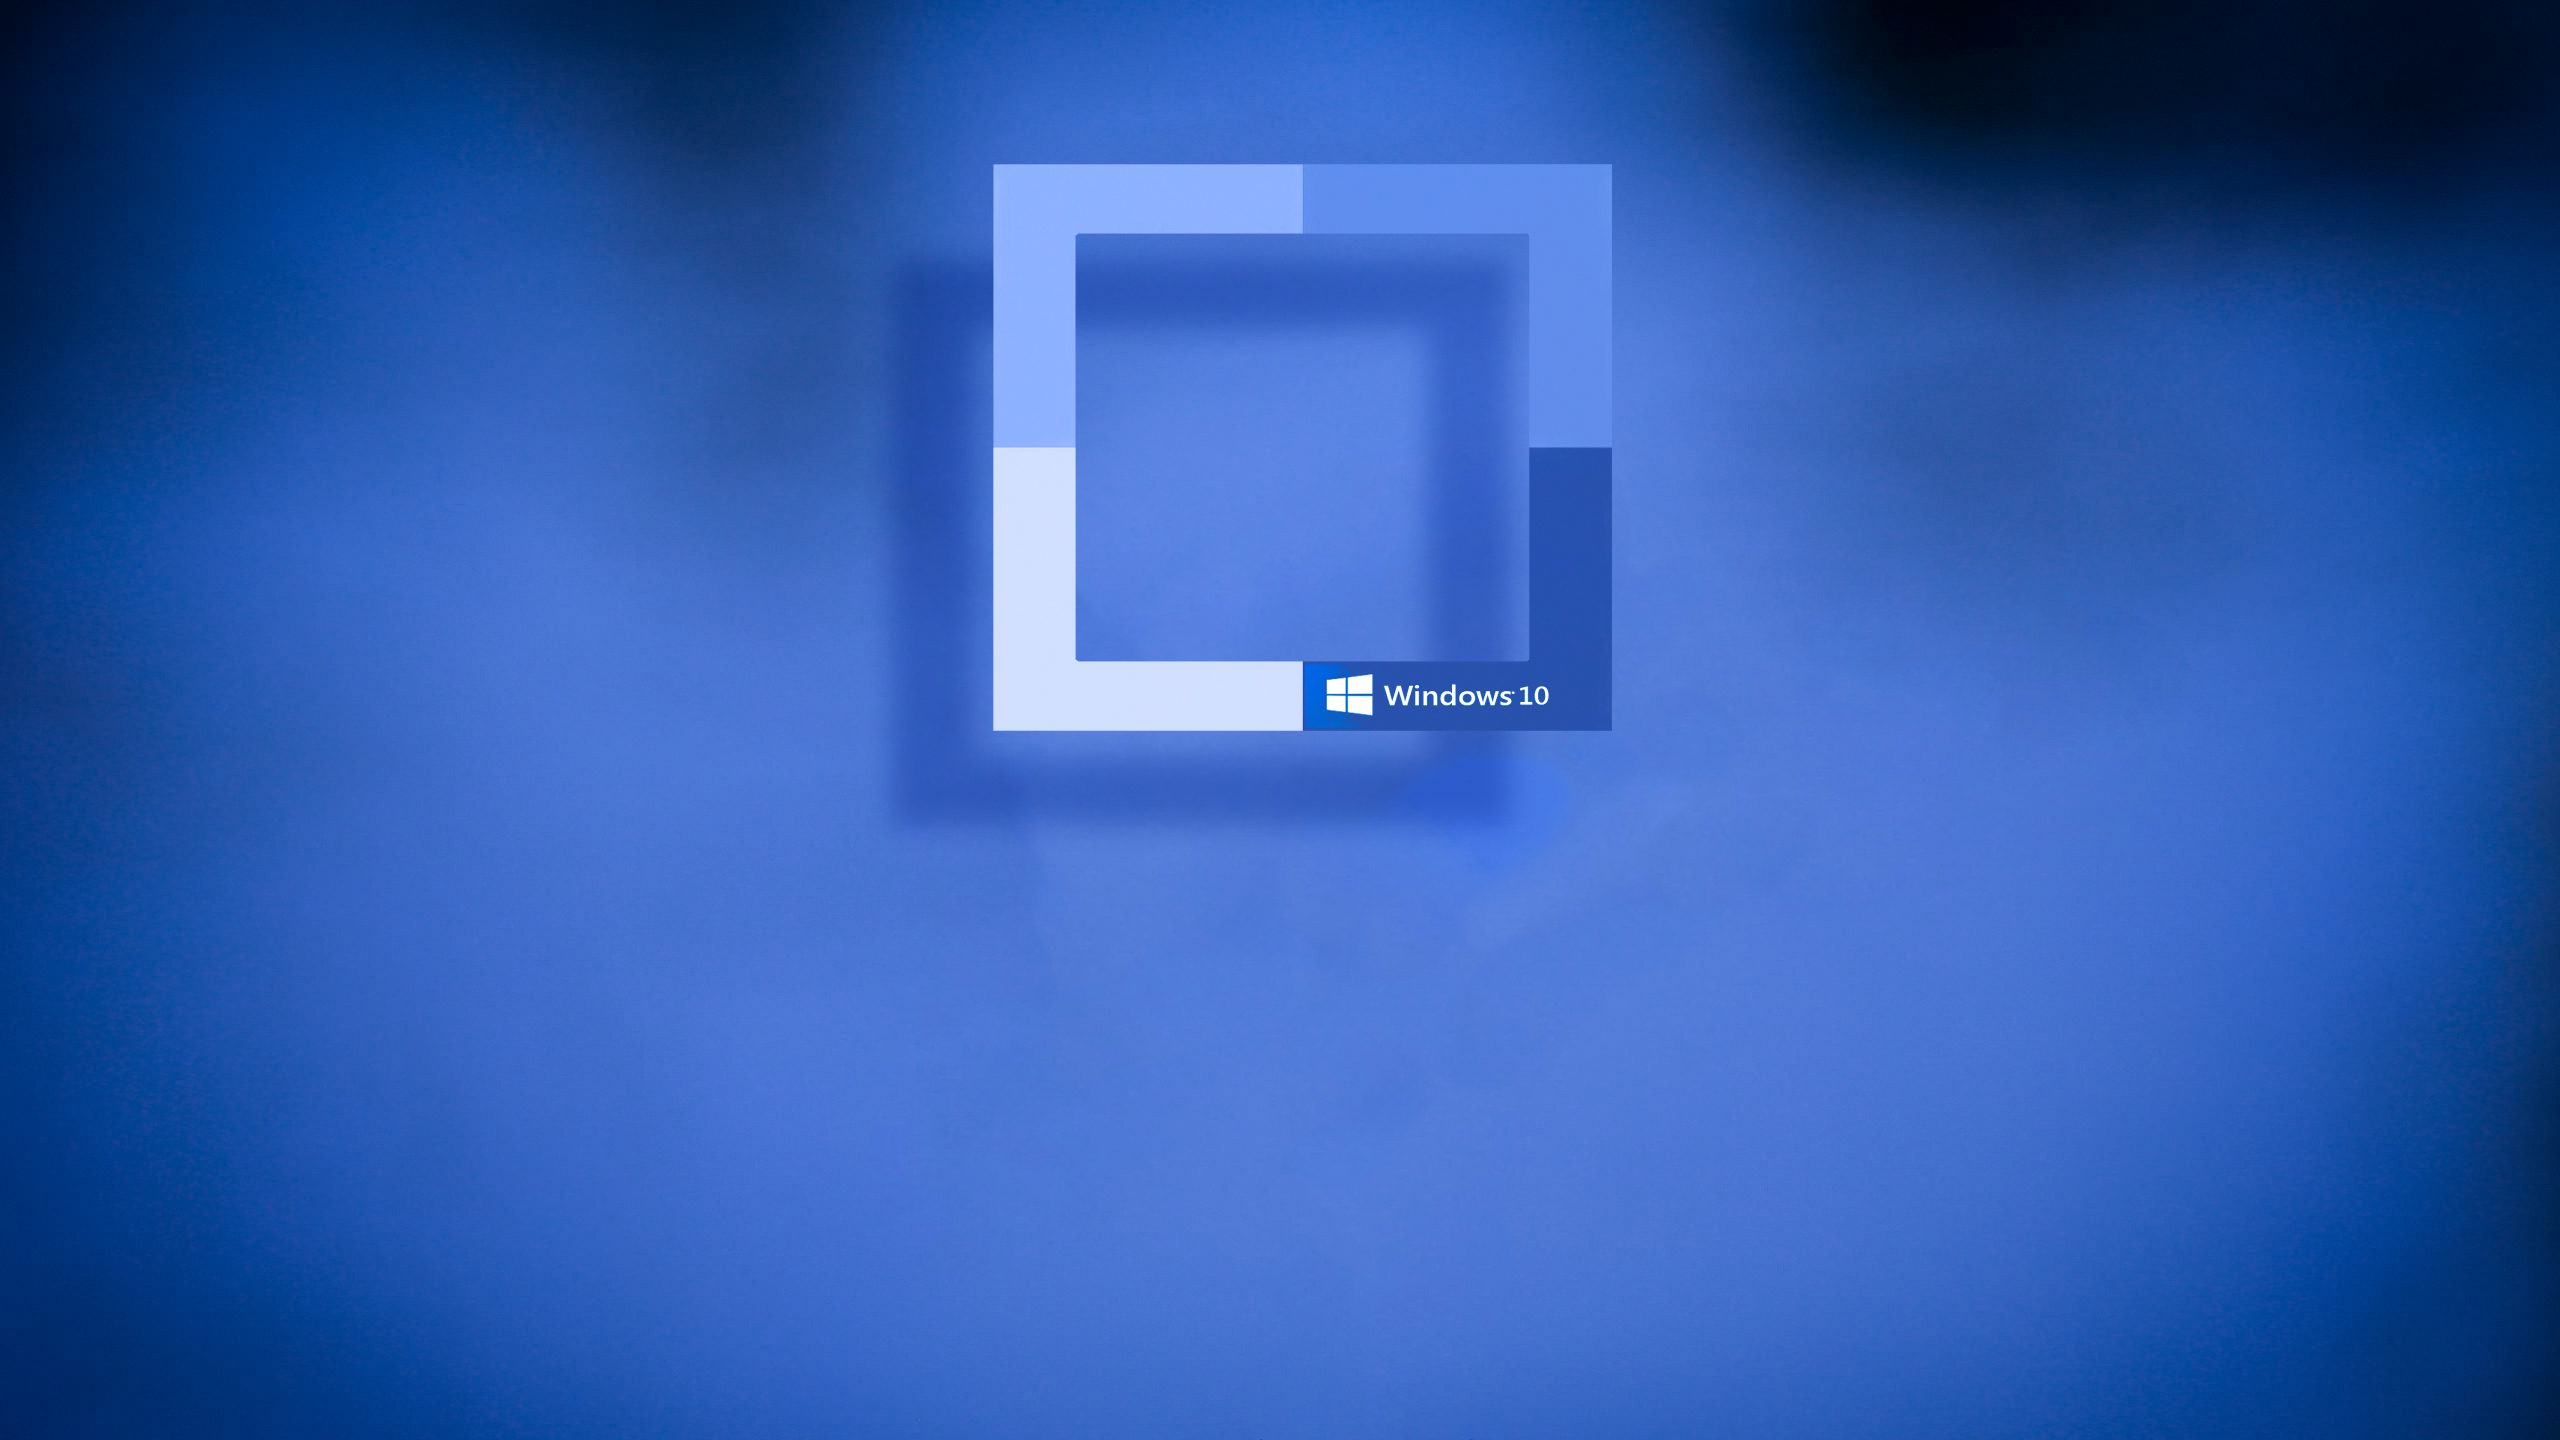 Windows 10 Wallpapers Desktop Backgrounds   5   HD Wallpapers 2560x1440